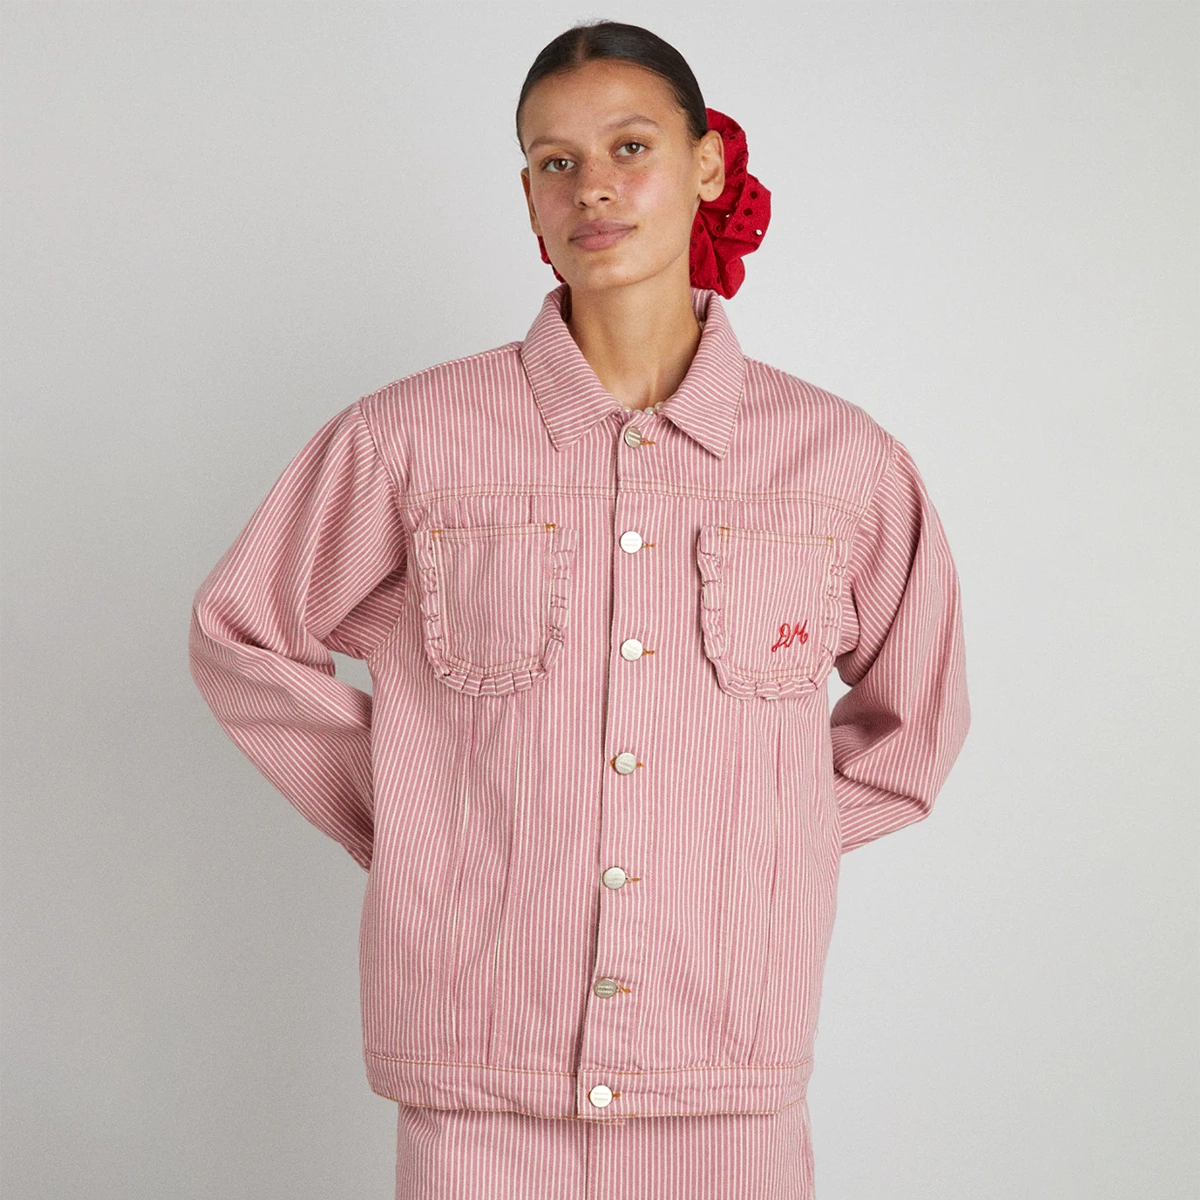 Damson Madder Pink Stripe Frilly Fin Jacket